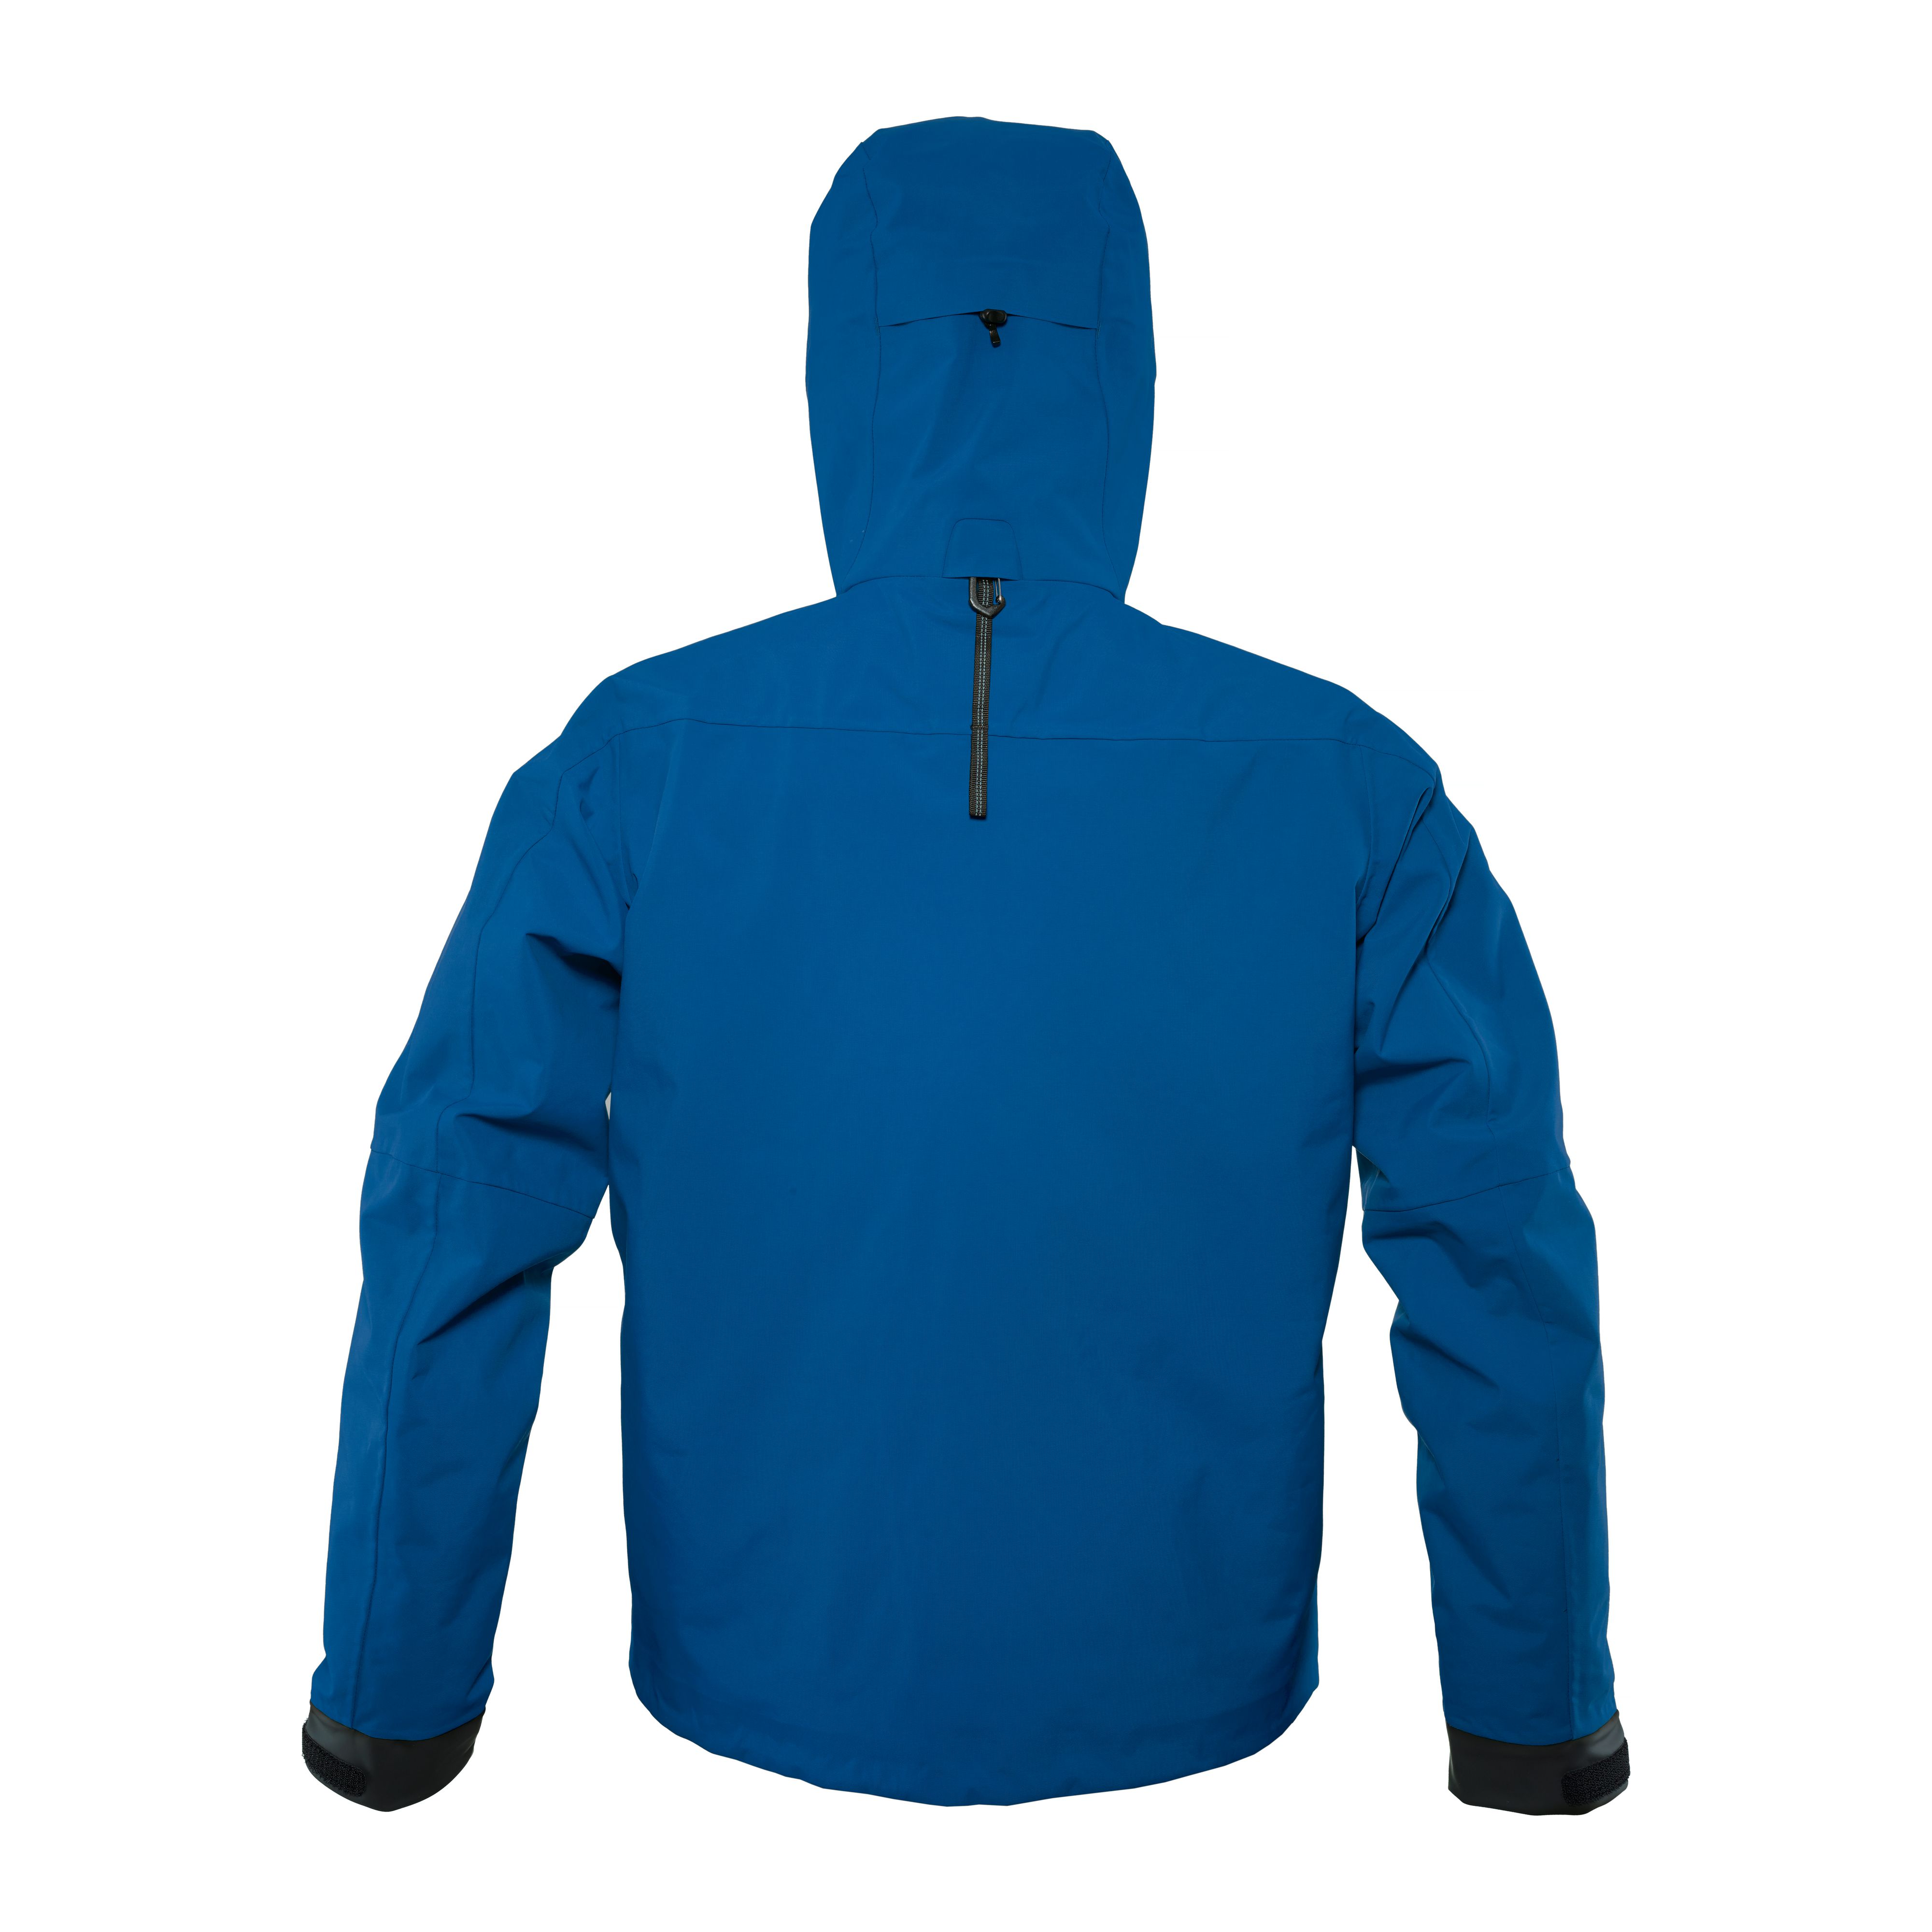 Waterproof Fishing Clothing: Jackets, Hoodies, Salopettes